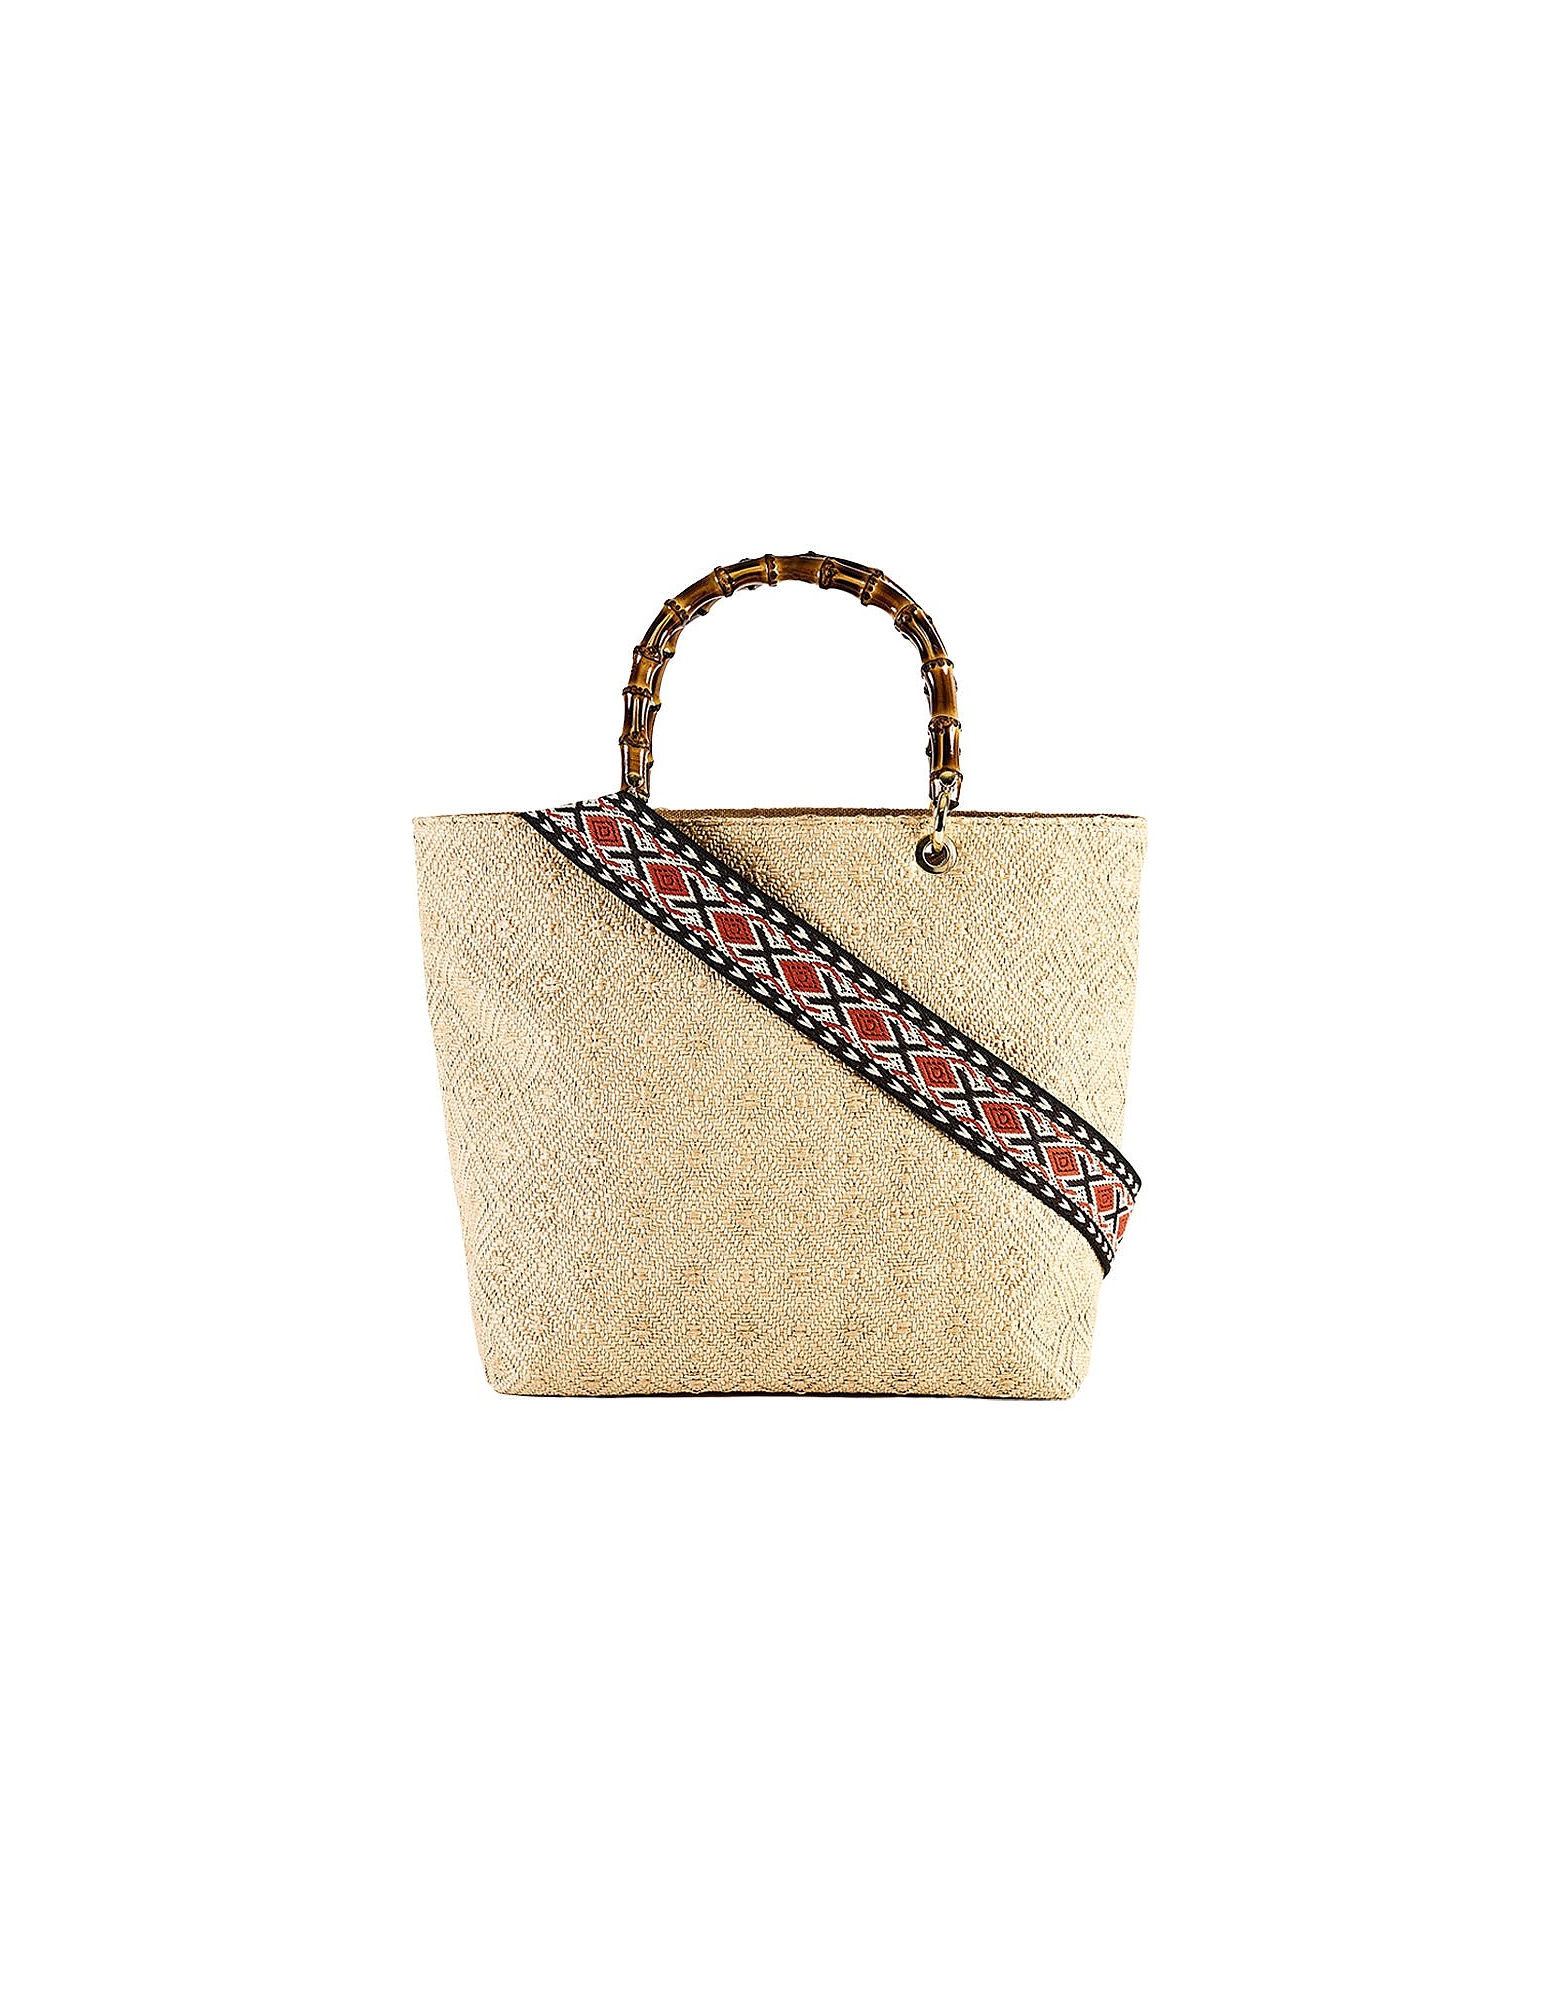 Viamailbag Designer Handbags Tenerife Yuta - Top Handle Bag In Neutres